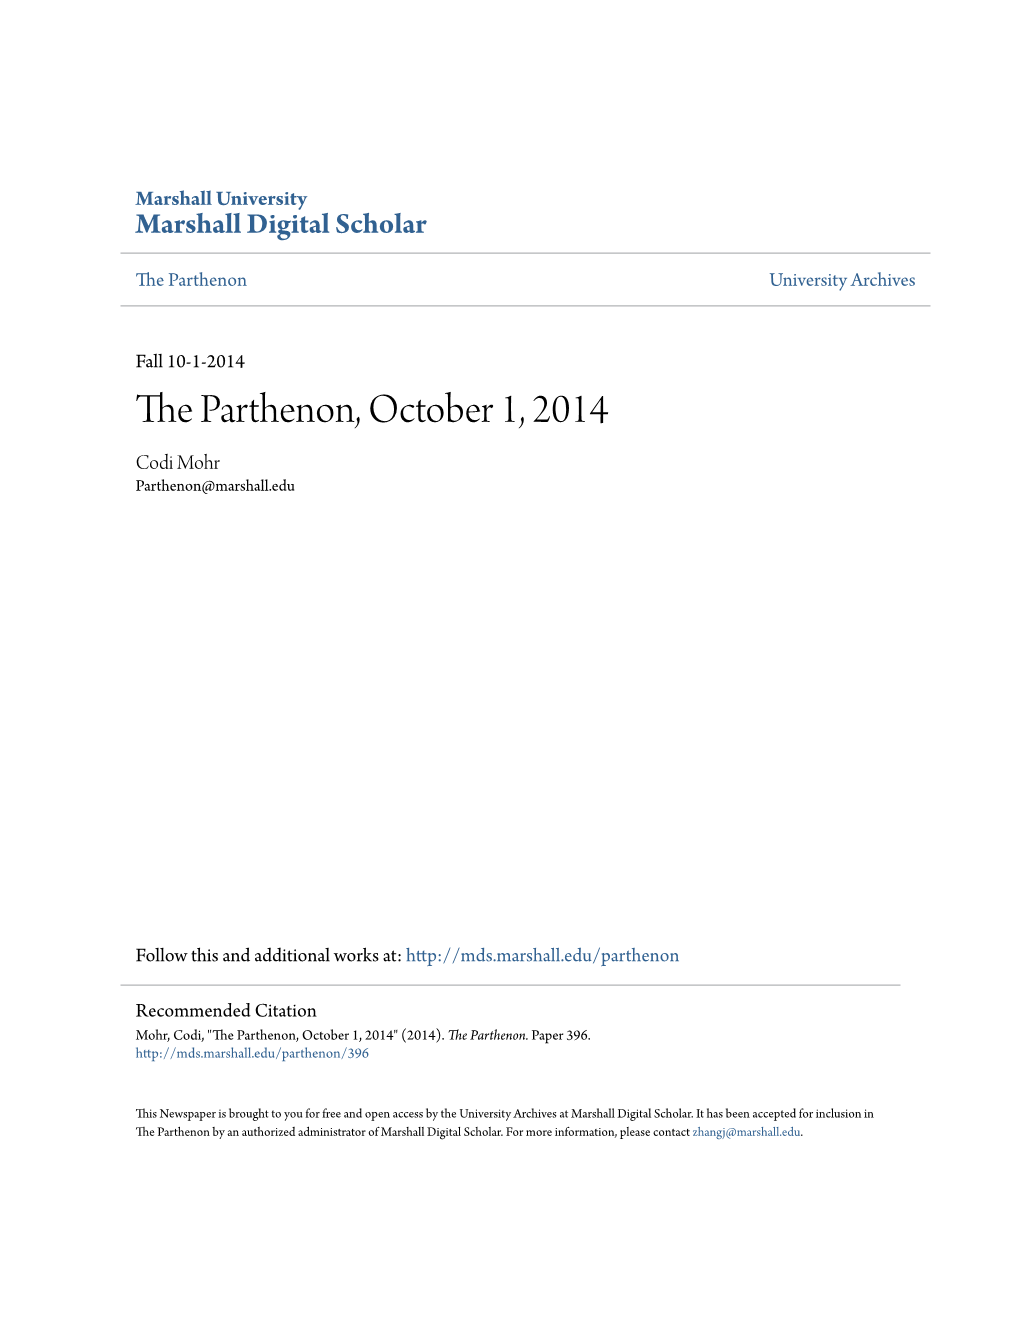 The Parthenon, October 1, 2014